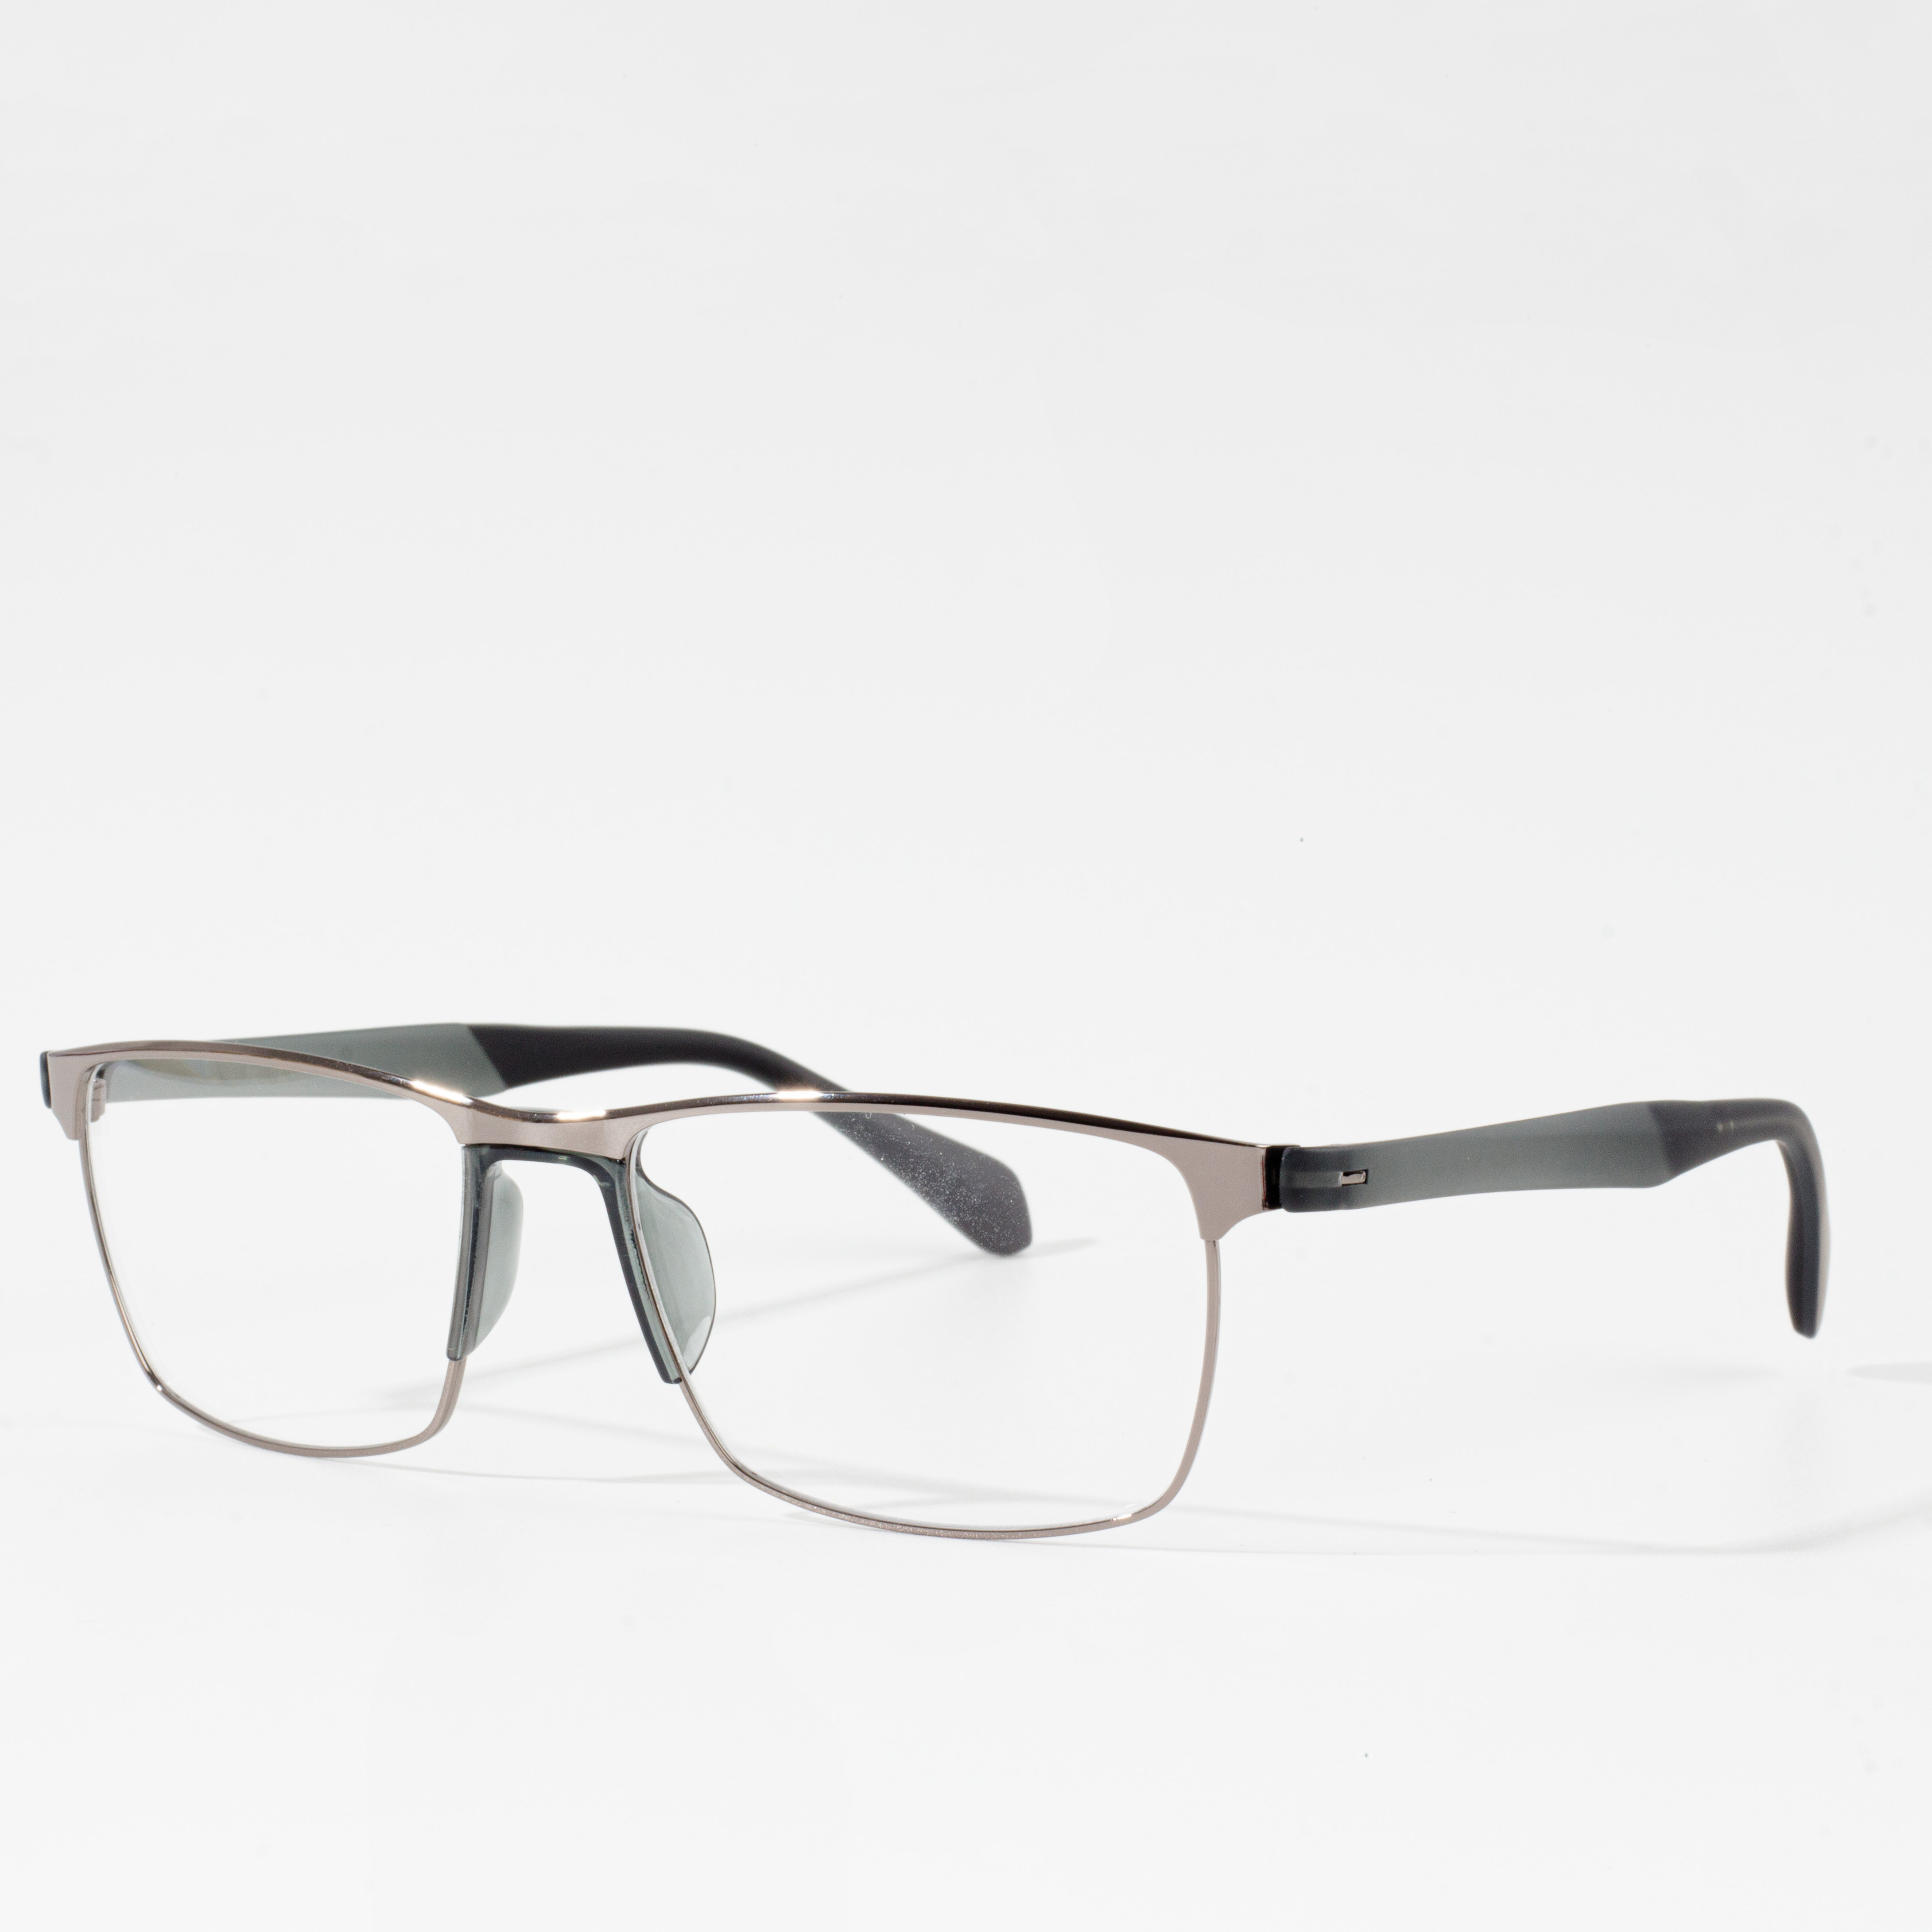 optical eyeglasses tr90 frame